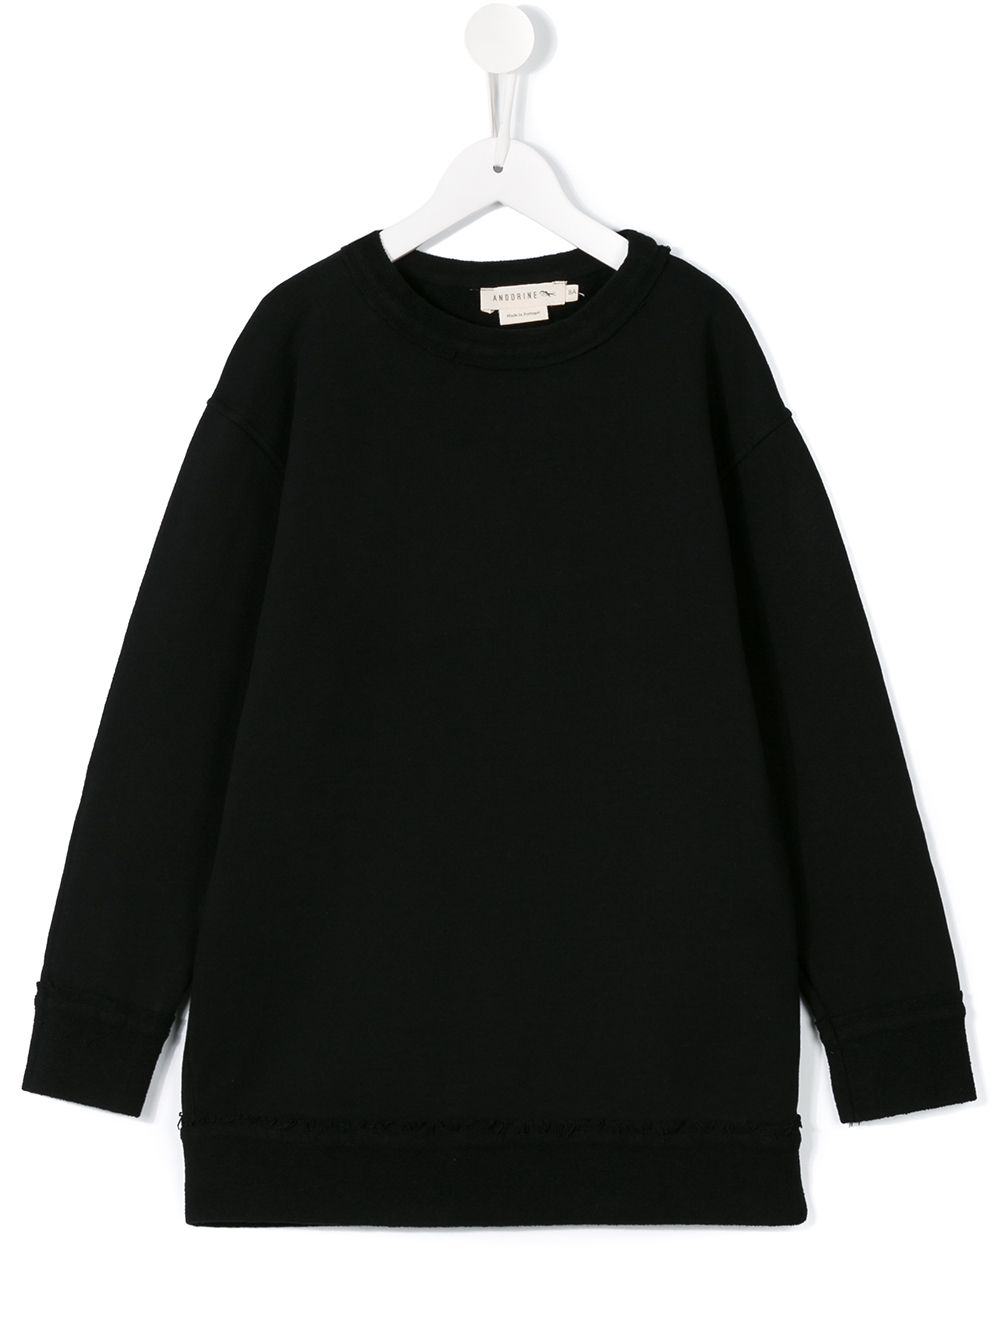 Andorine frayed edge sweatshirt dress - Black von Andorine